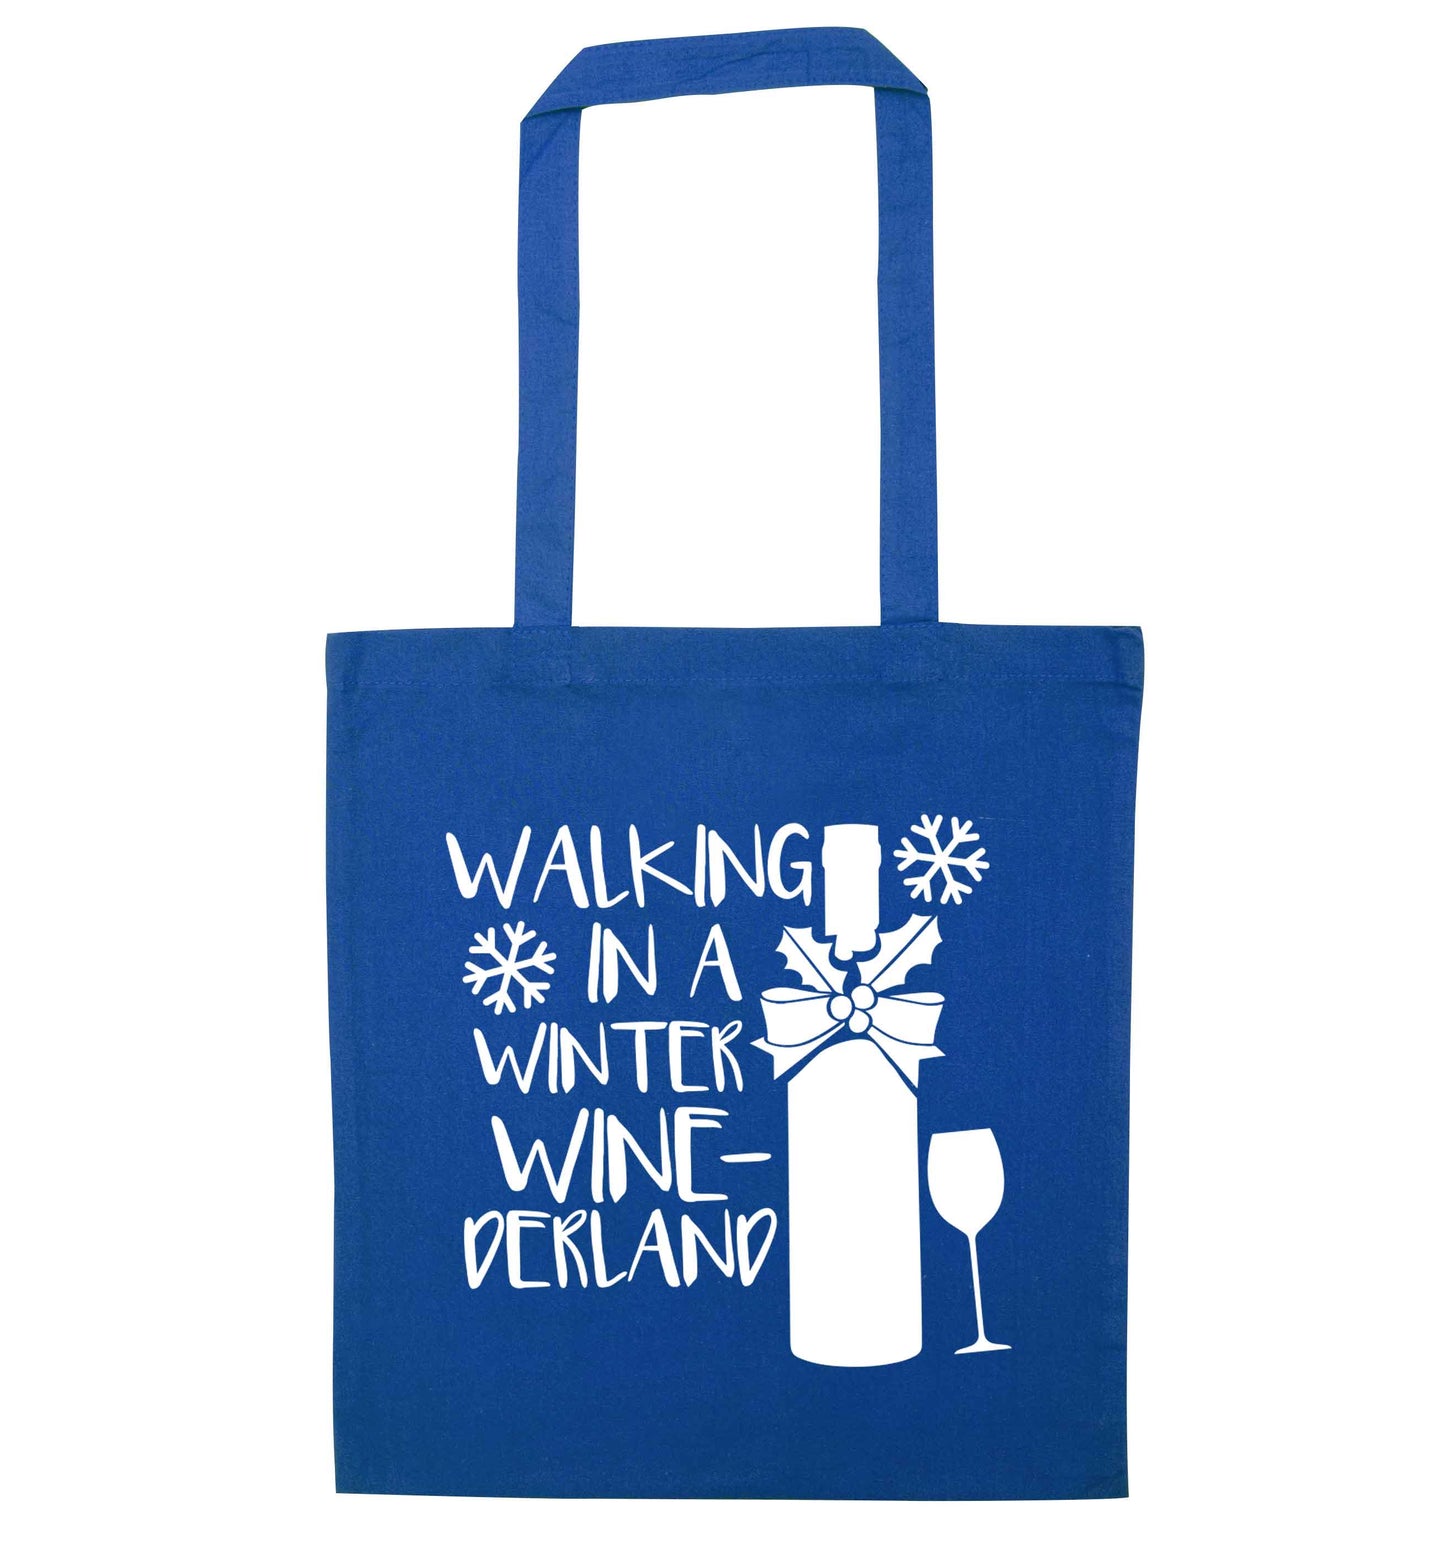 Walking in a wine-derwonderland blue tote bag